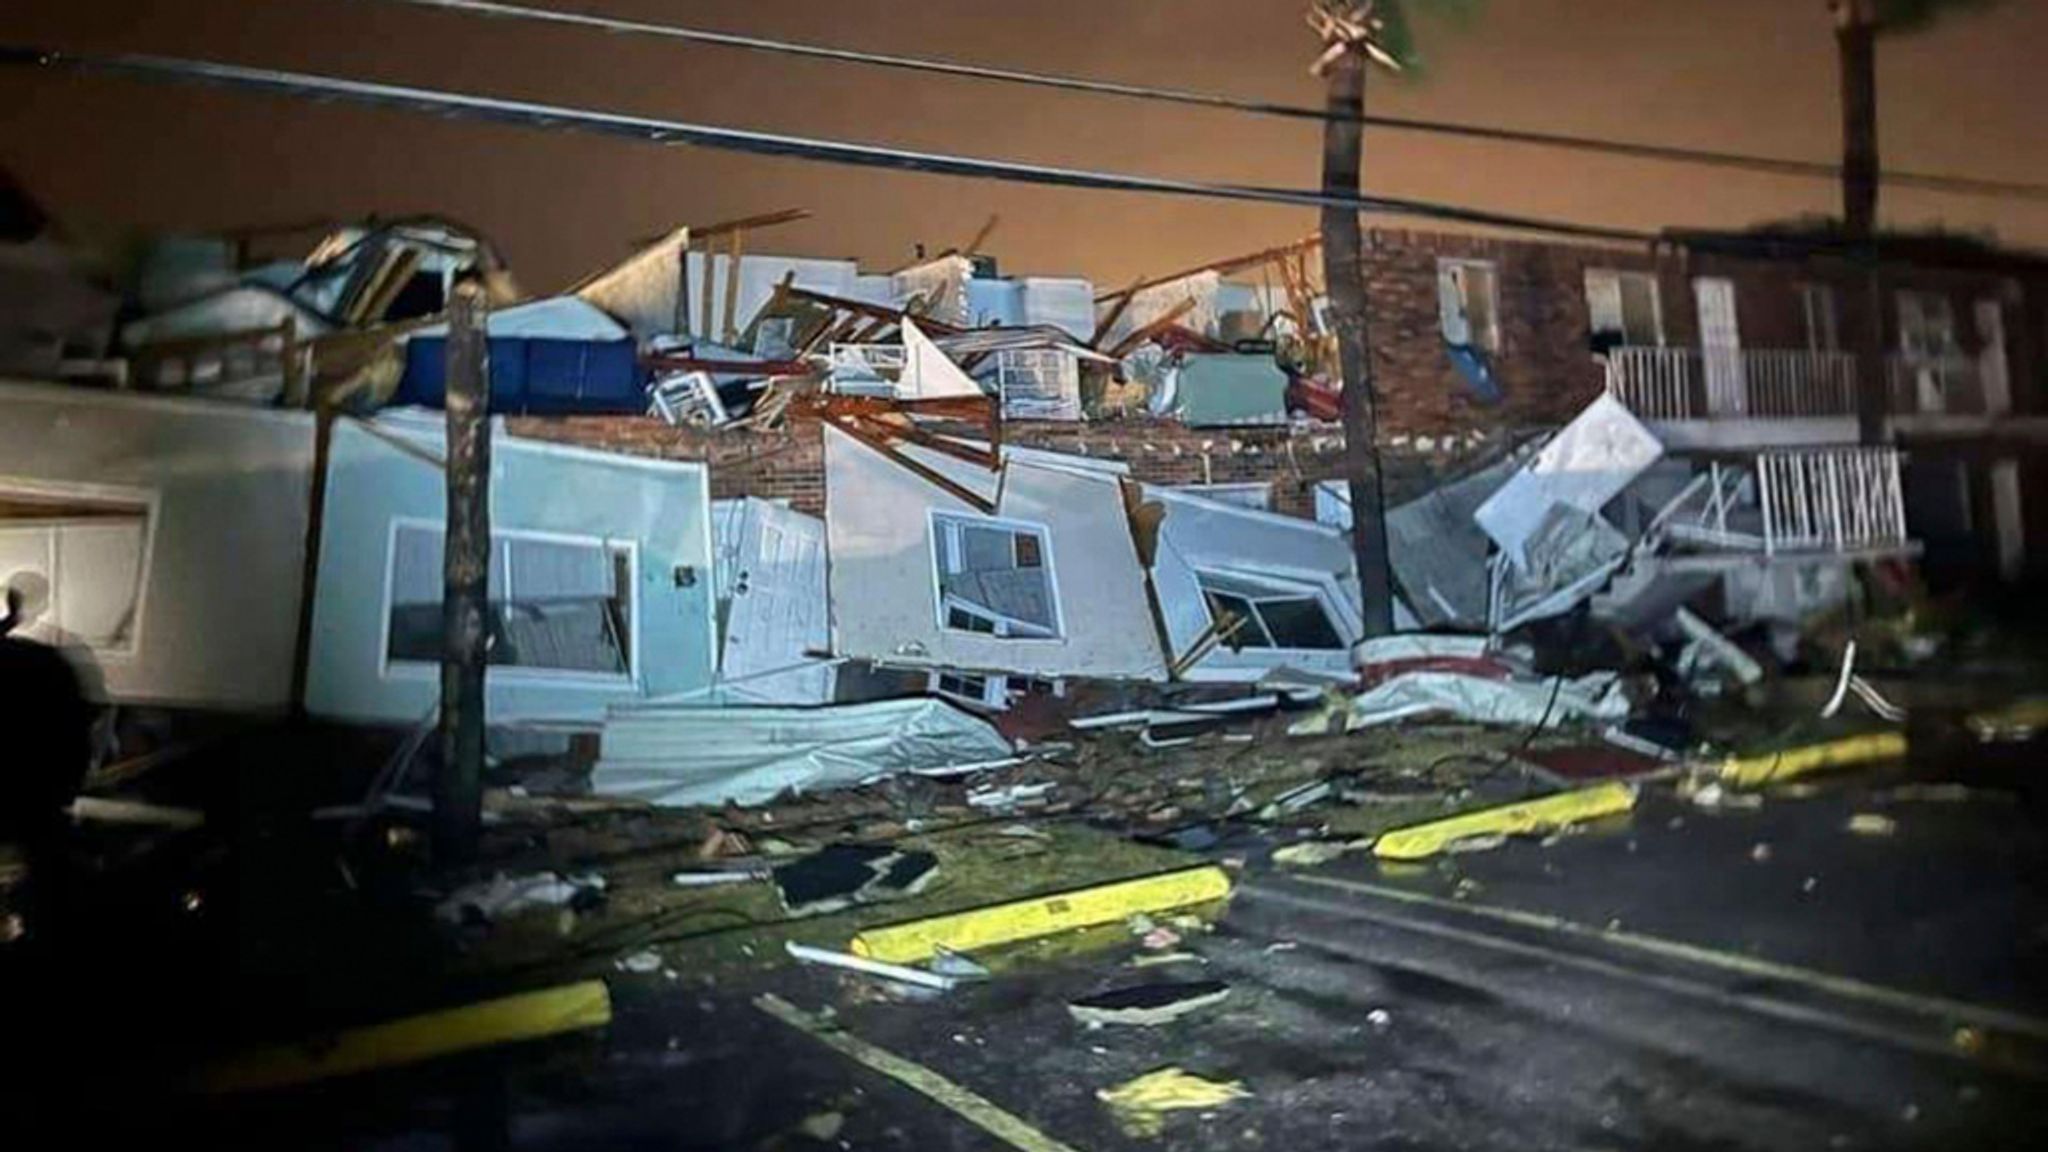 Hurricane destruction damage devastation aftermath panhandle amidst